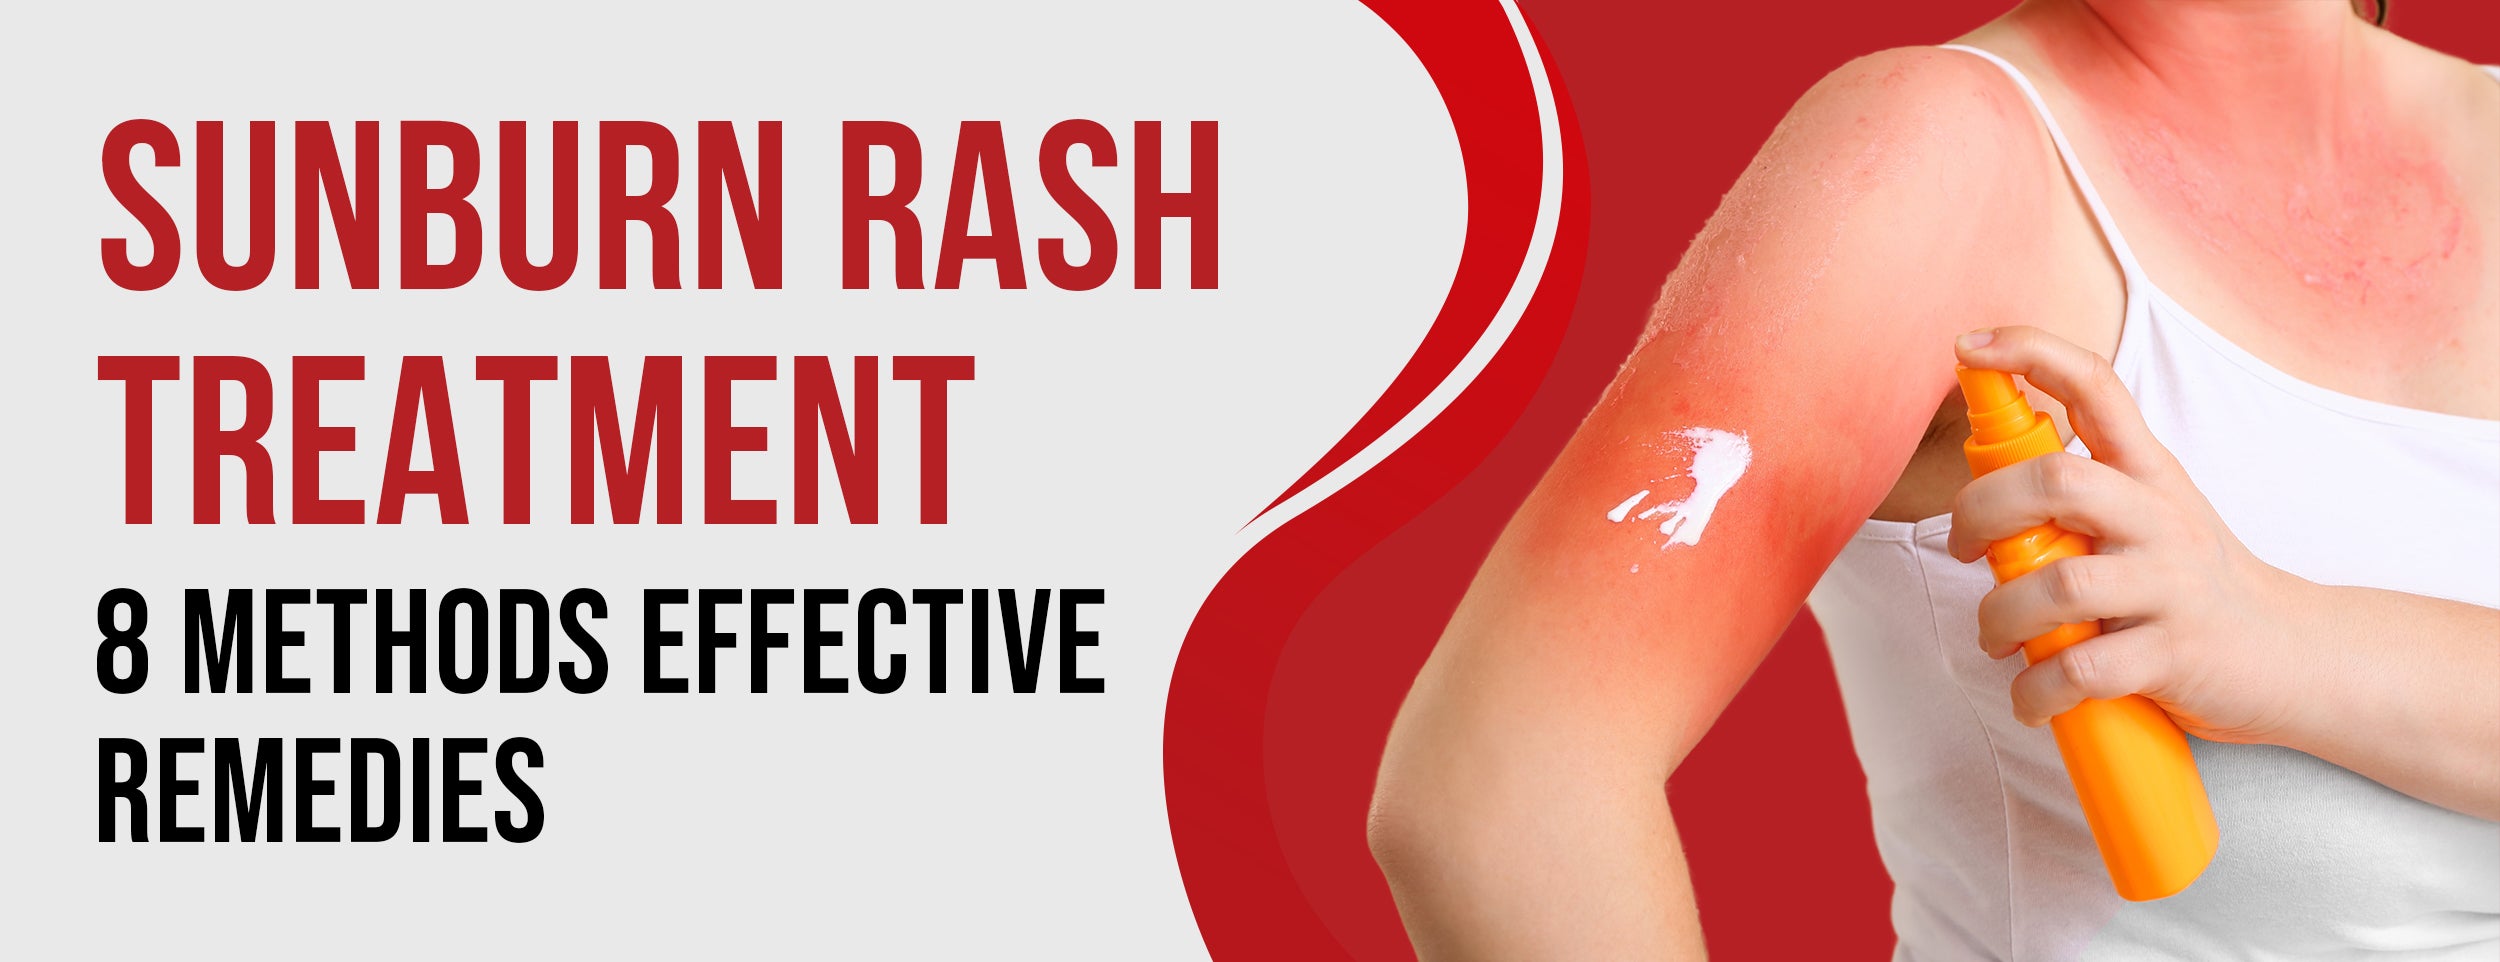 Medical Procedures and Home Remedies for Sunburn Rash